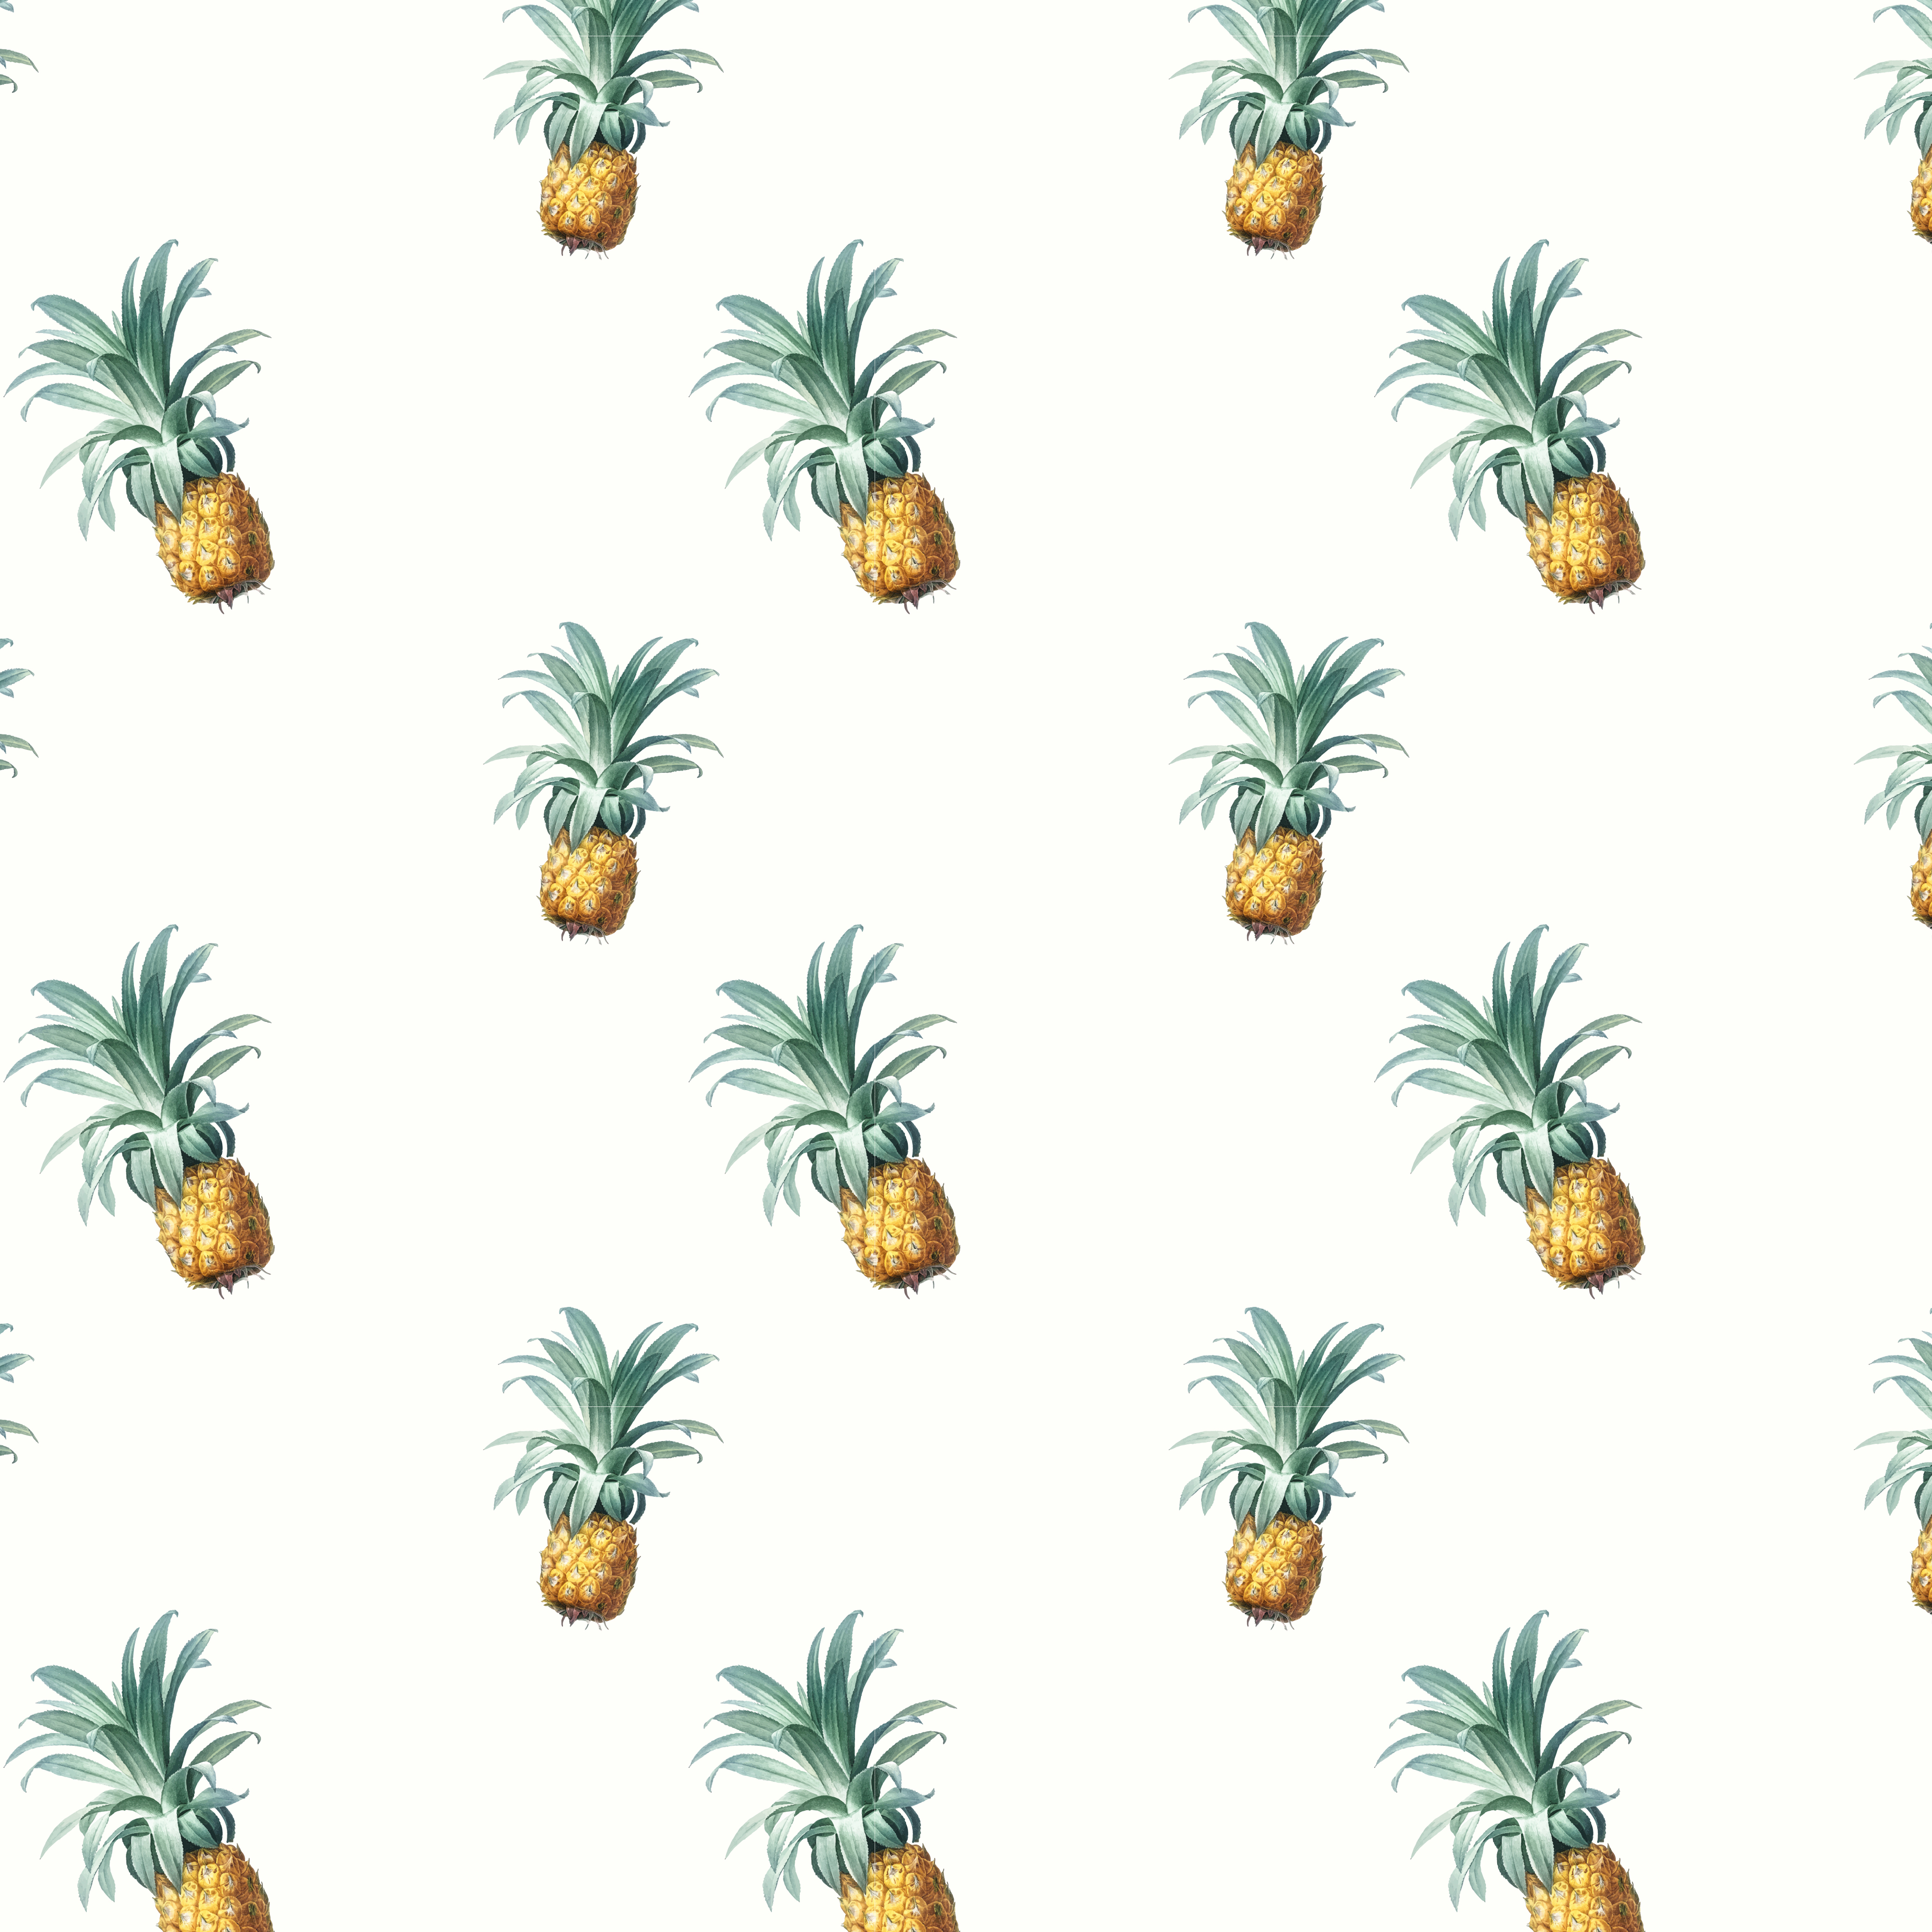 Pineapple pattern illustration - Download Free Vectors ...